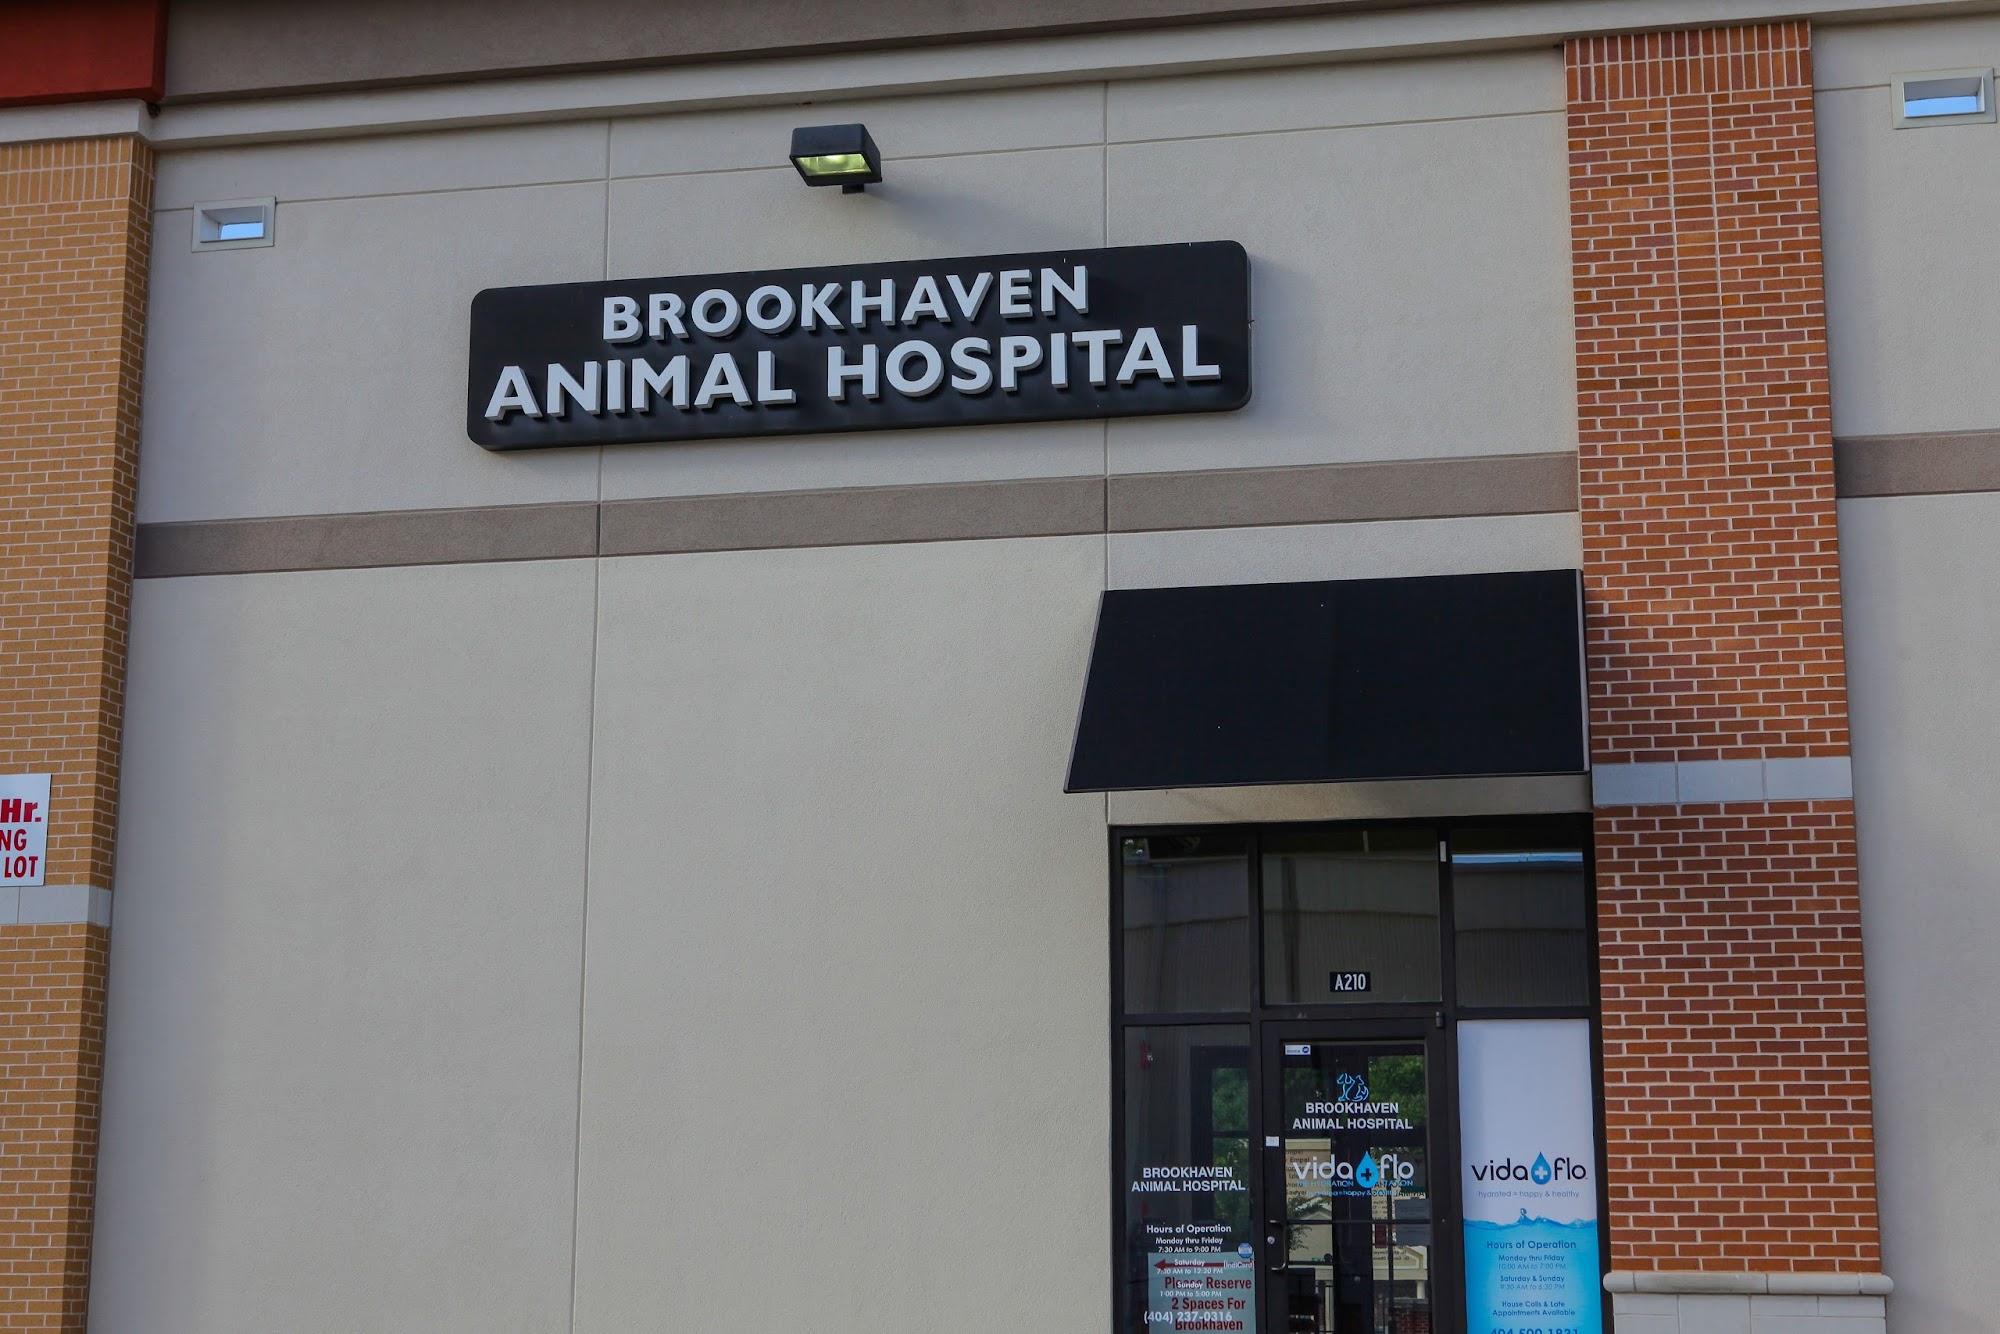 Brookhaven Animal Hospital